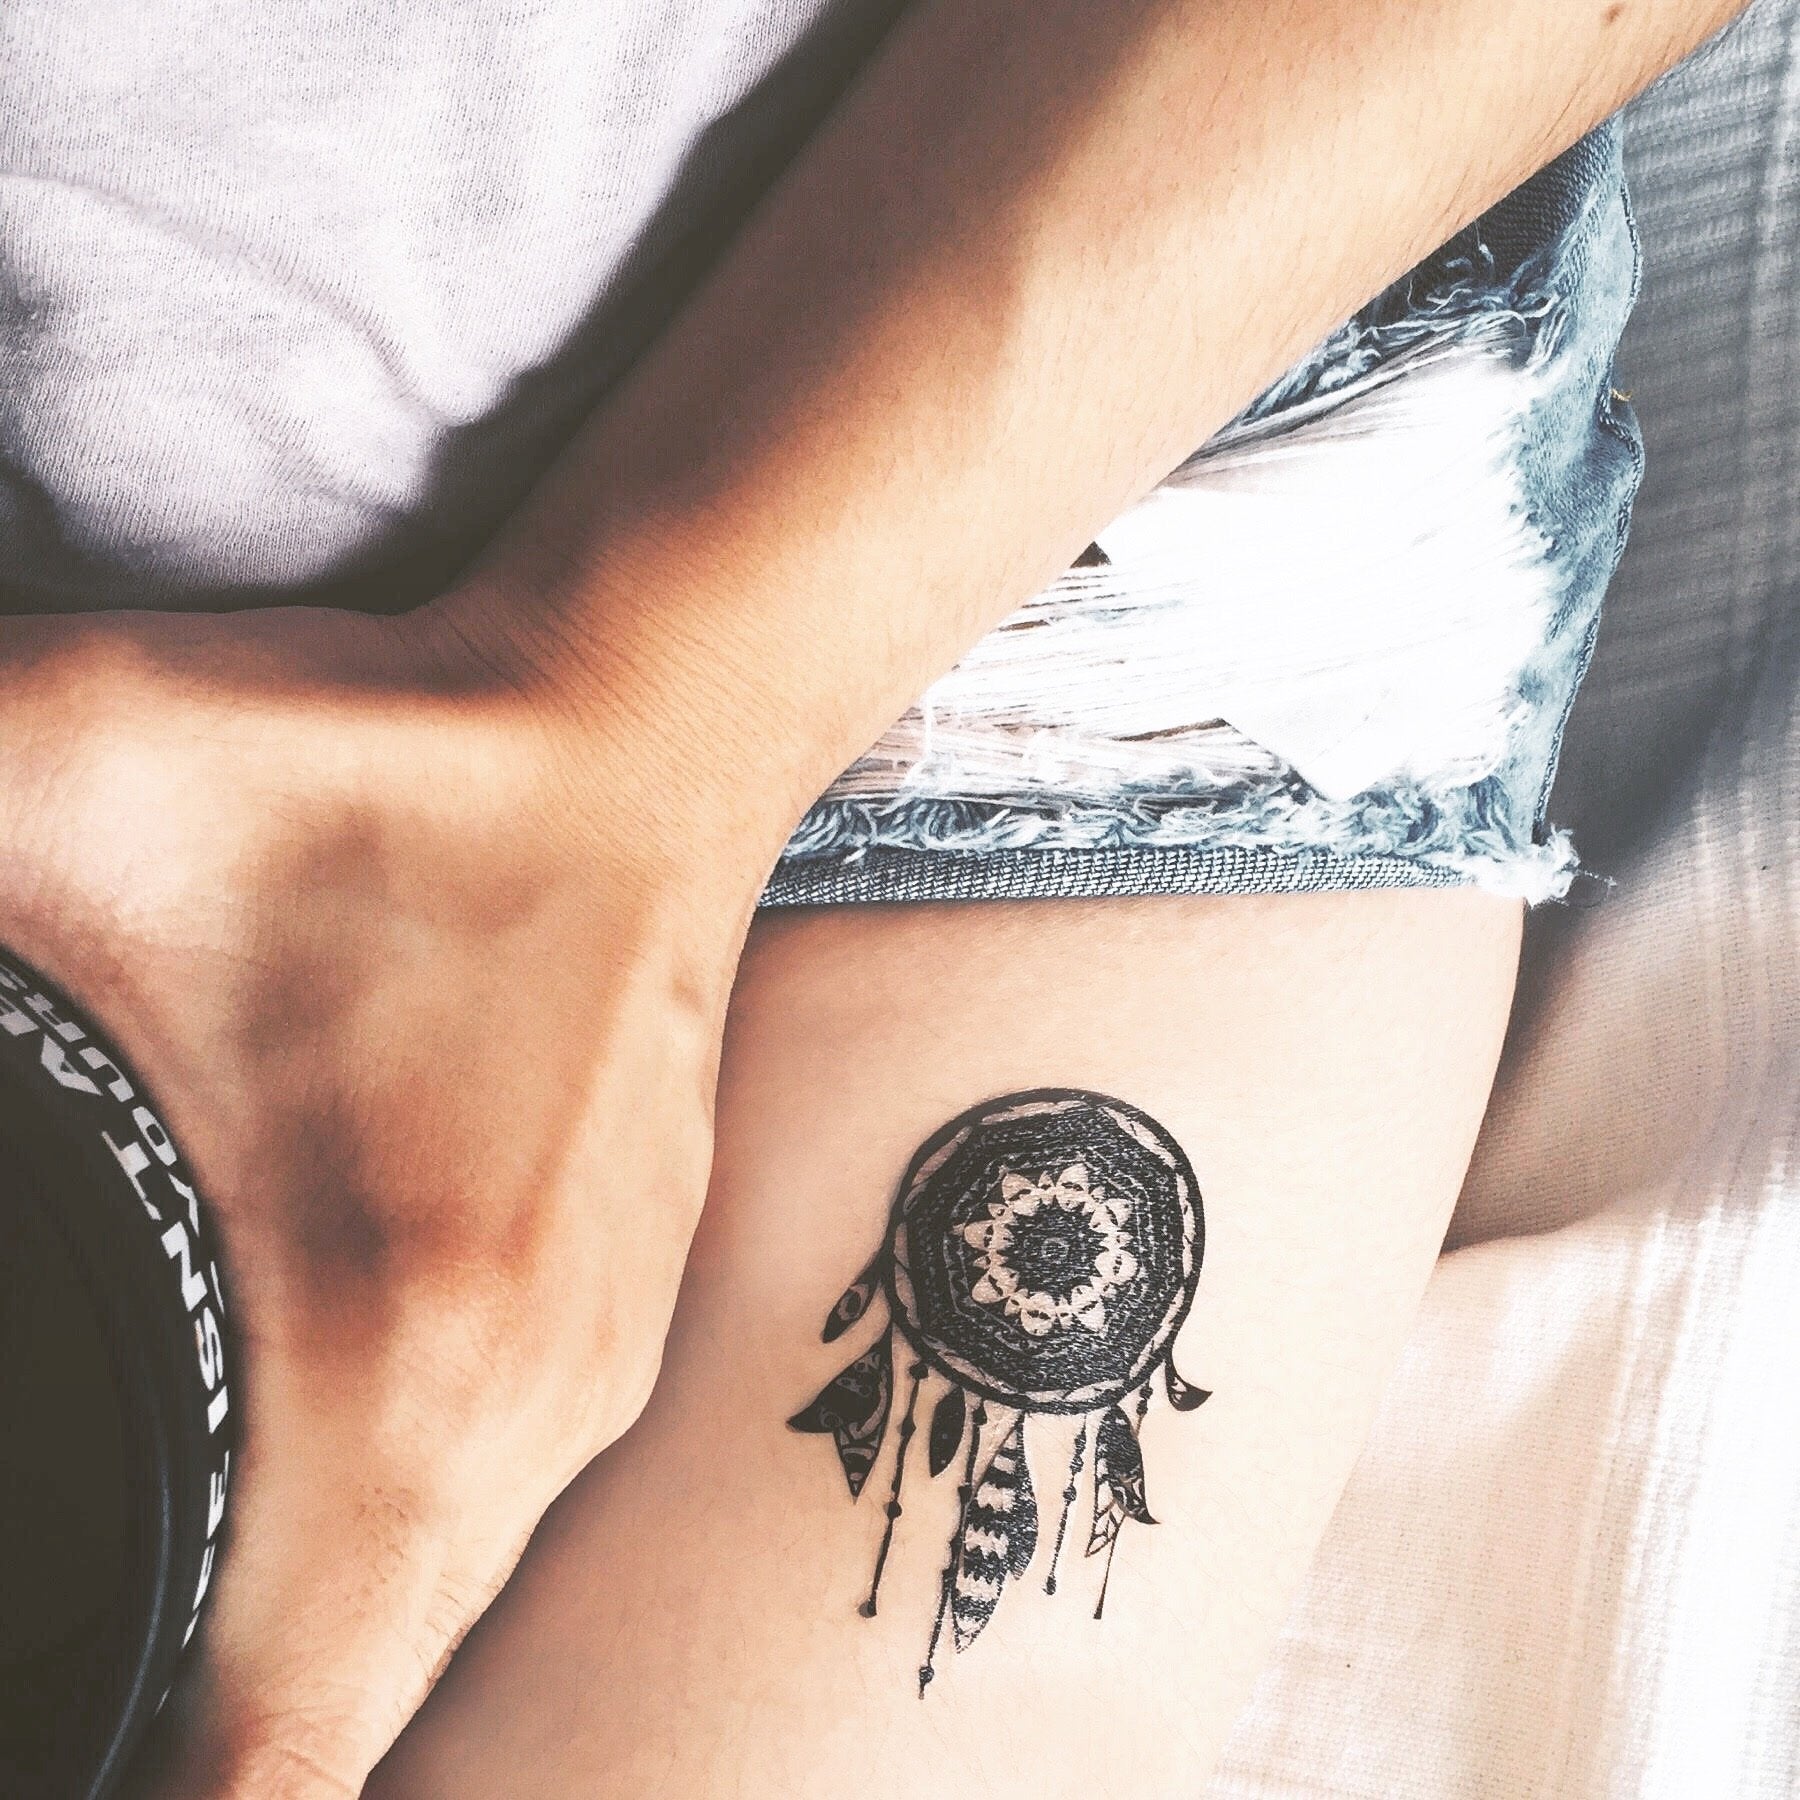 fake small dream catcher blackfoot indian native pride ojibwe wind chime bohemian temporary tattoo sticker design idea on thigh